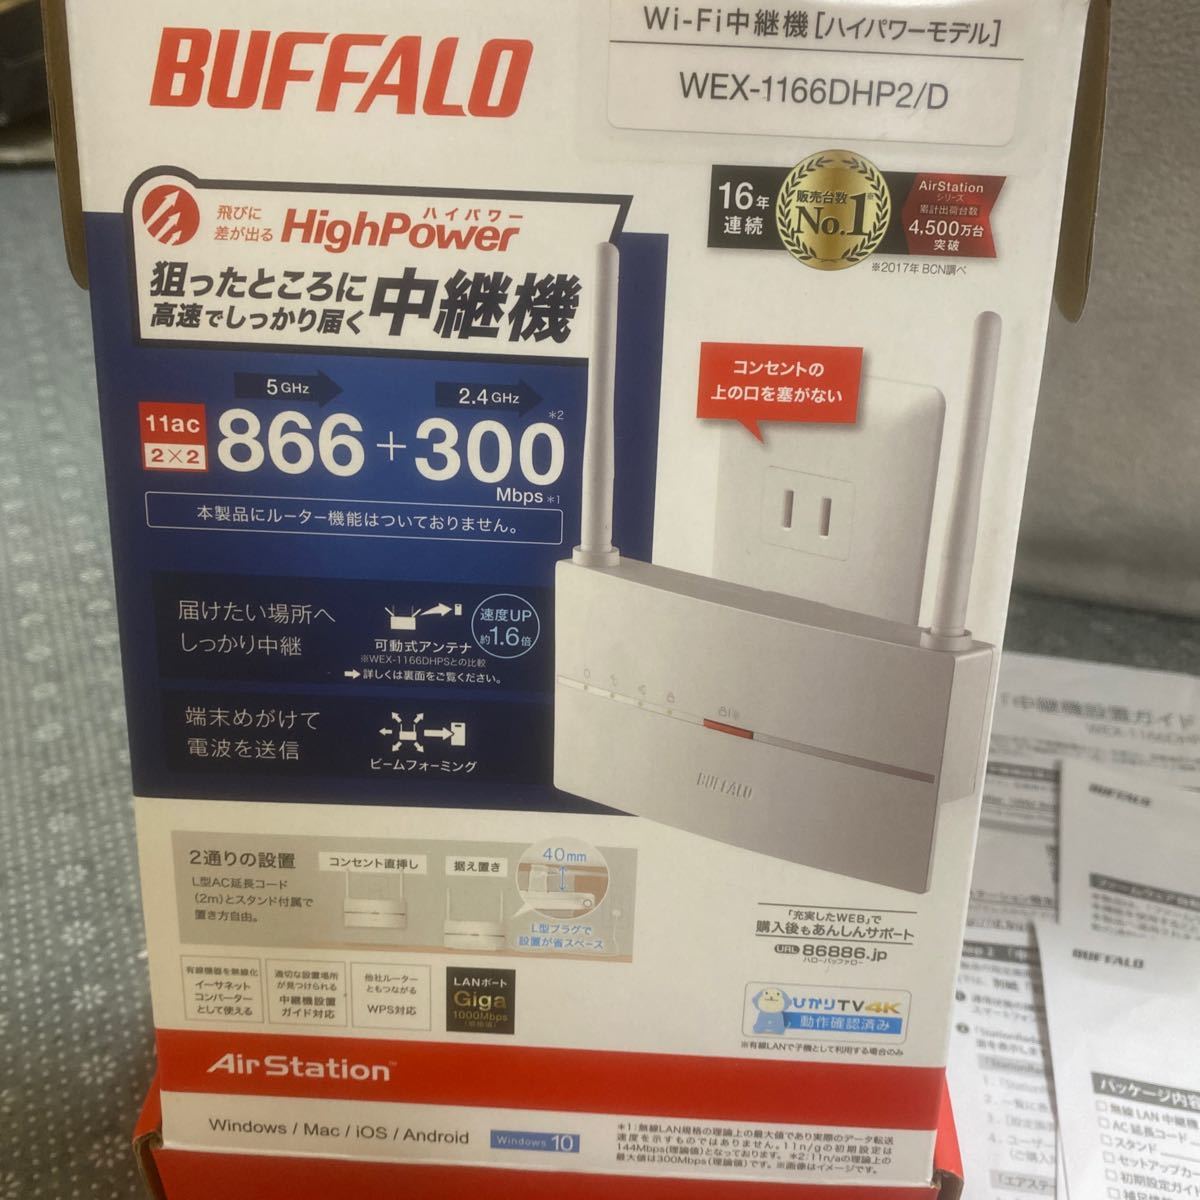 BUFFALO WiFi 無線LAN 中継機 WEX-1166DHP2/N 11ac 866+300Mbps コンセント直挿し